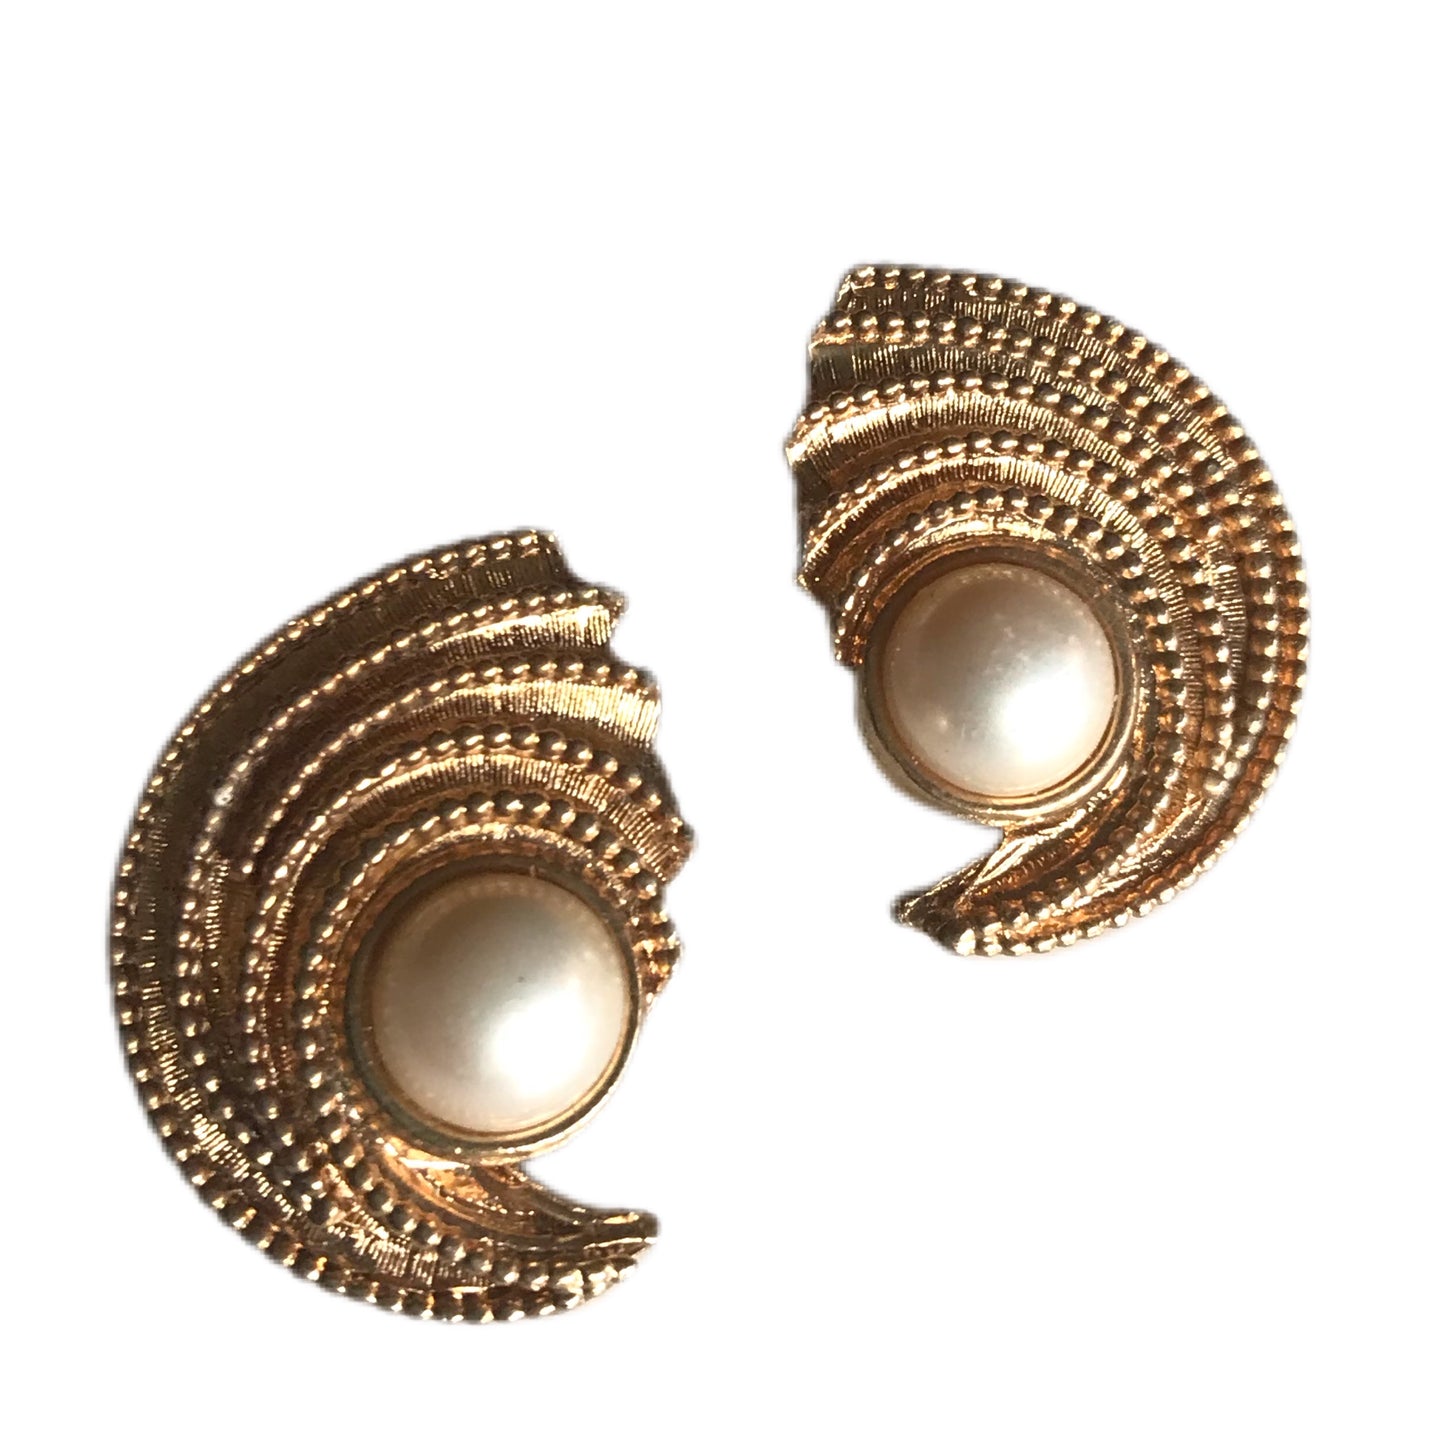 Faux Pearl and Swirled Gold Tone Metal Clip Earrings circa 1960s